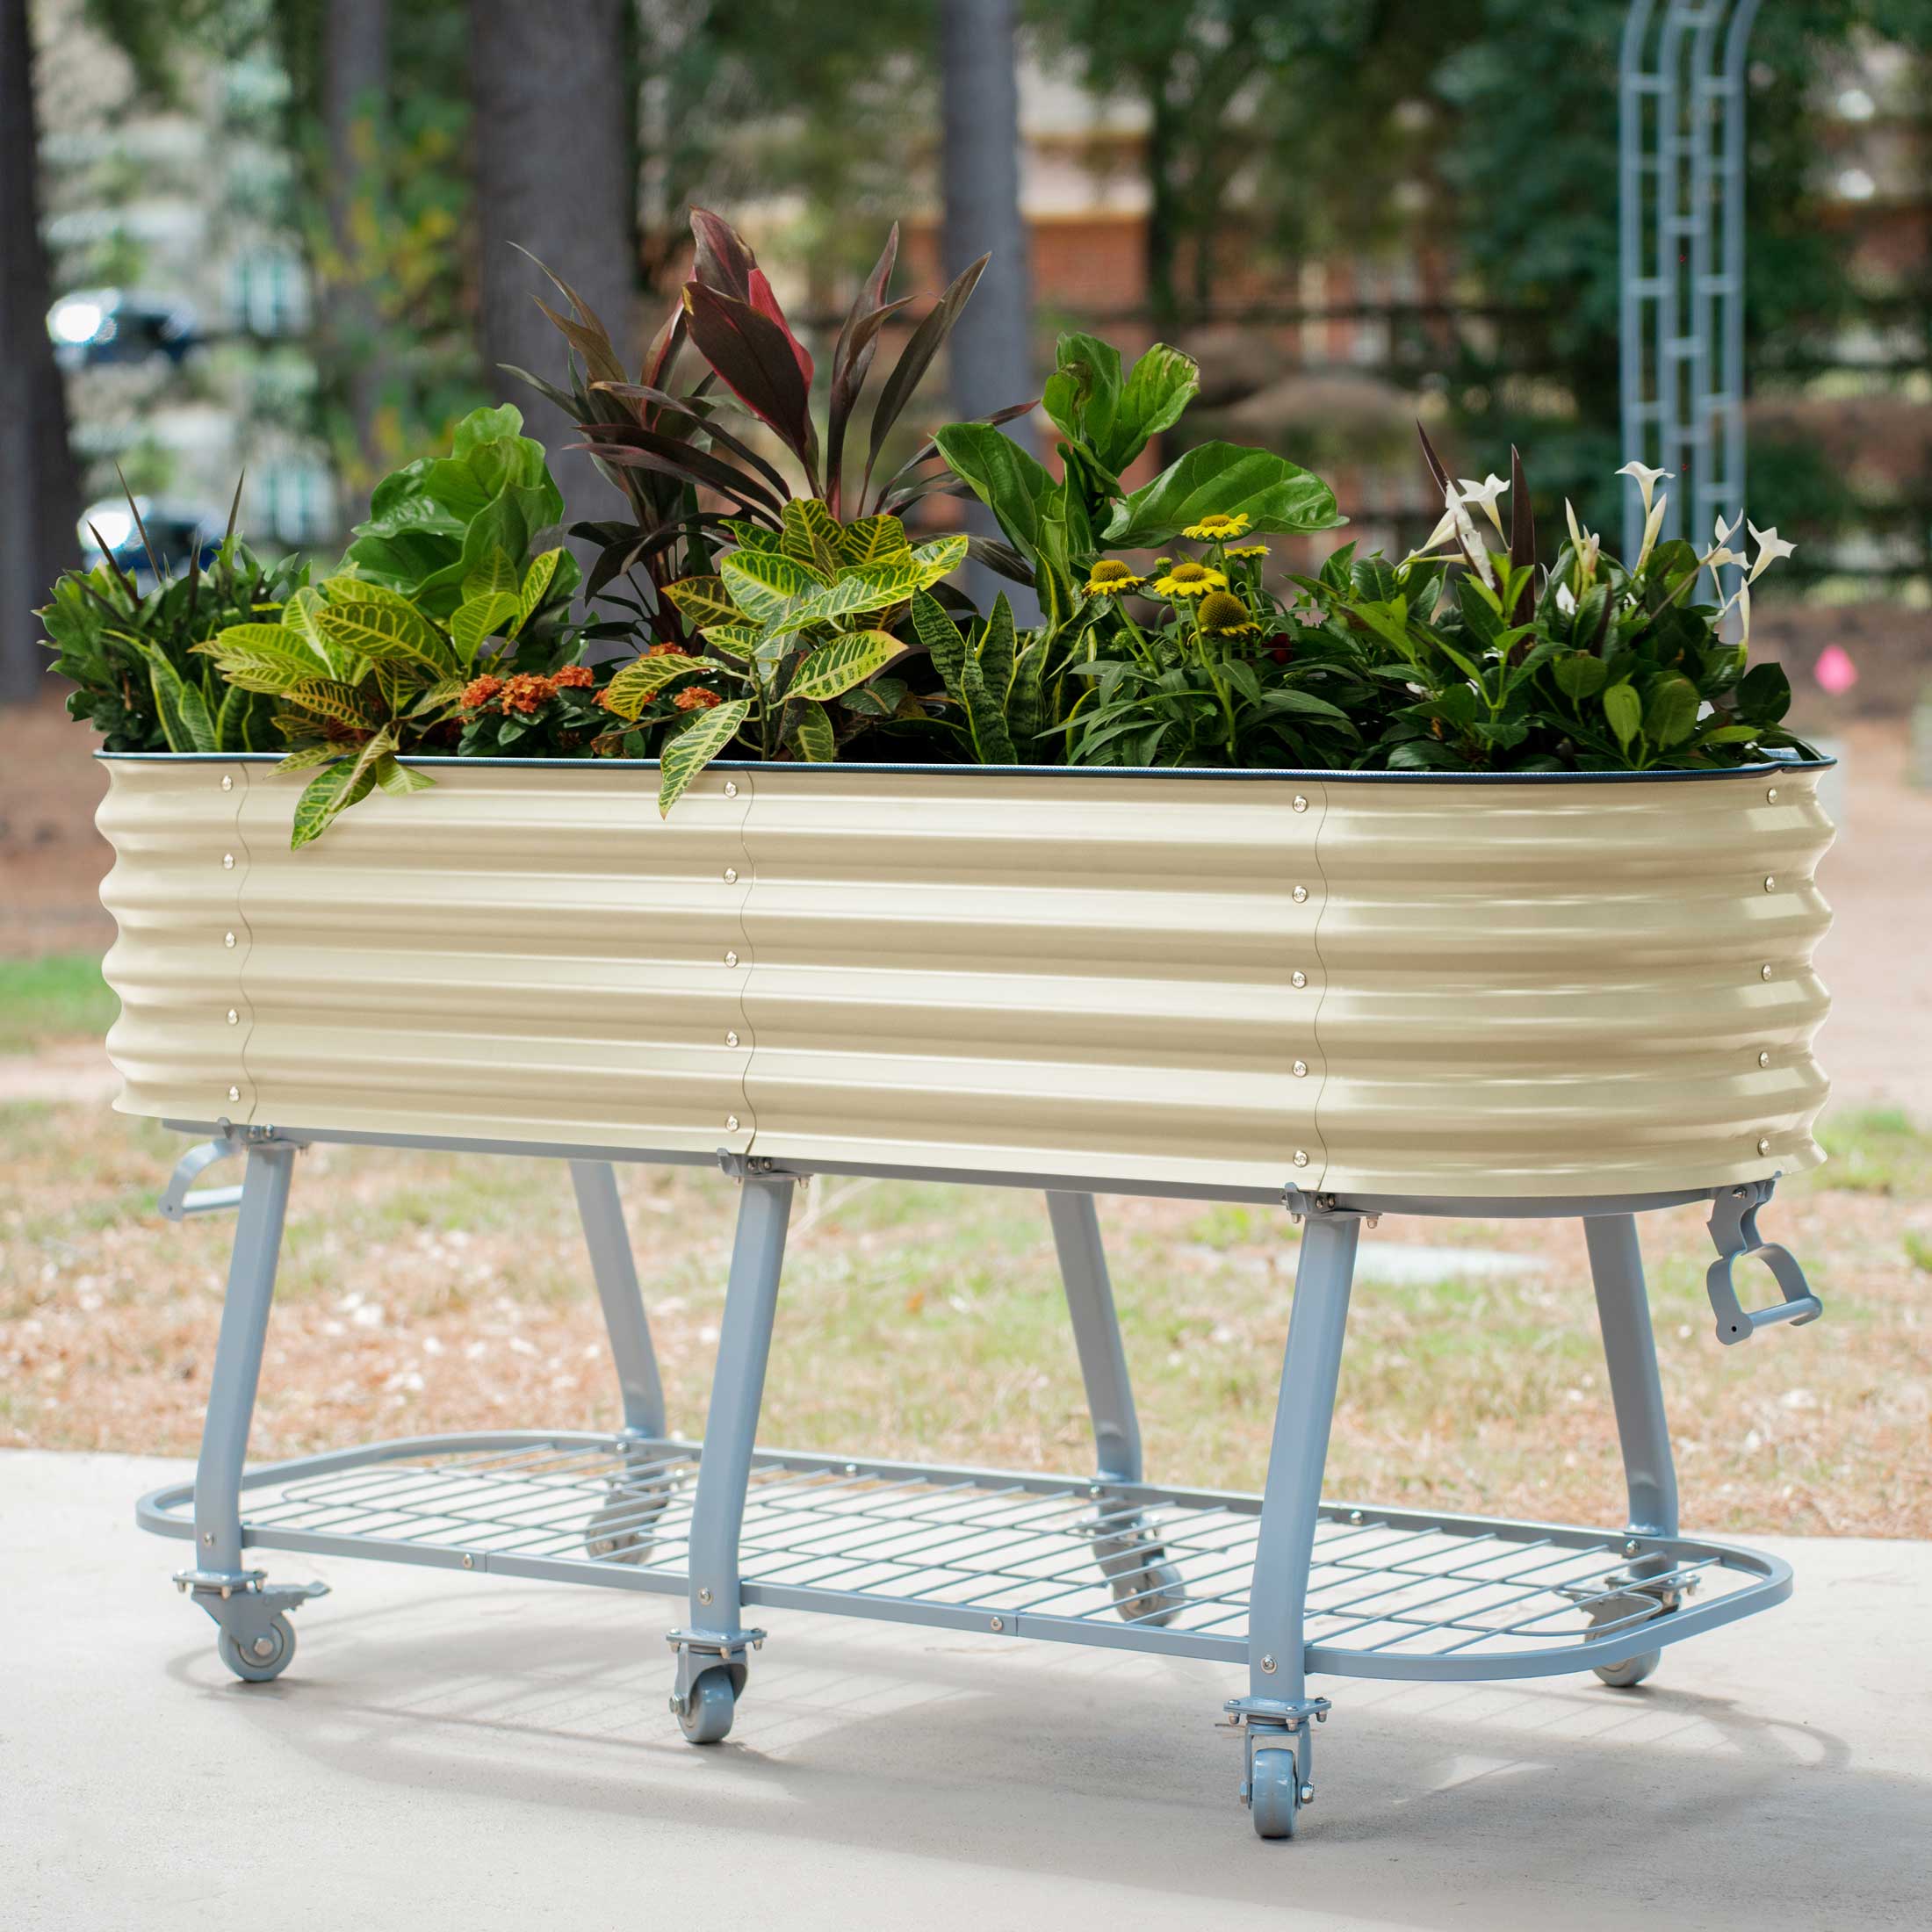 Elevated Rolling Self-Watering Garden Bed